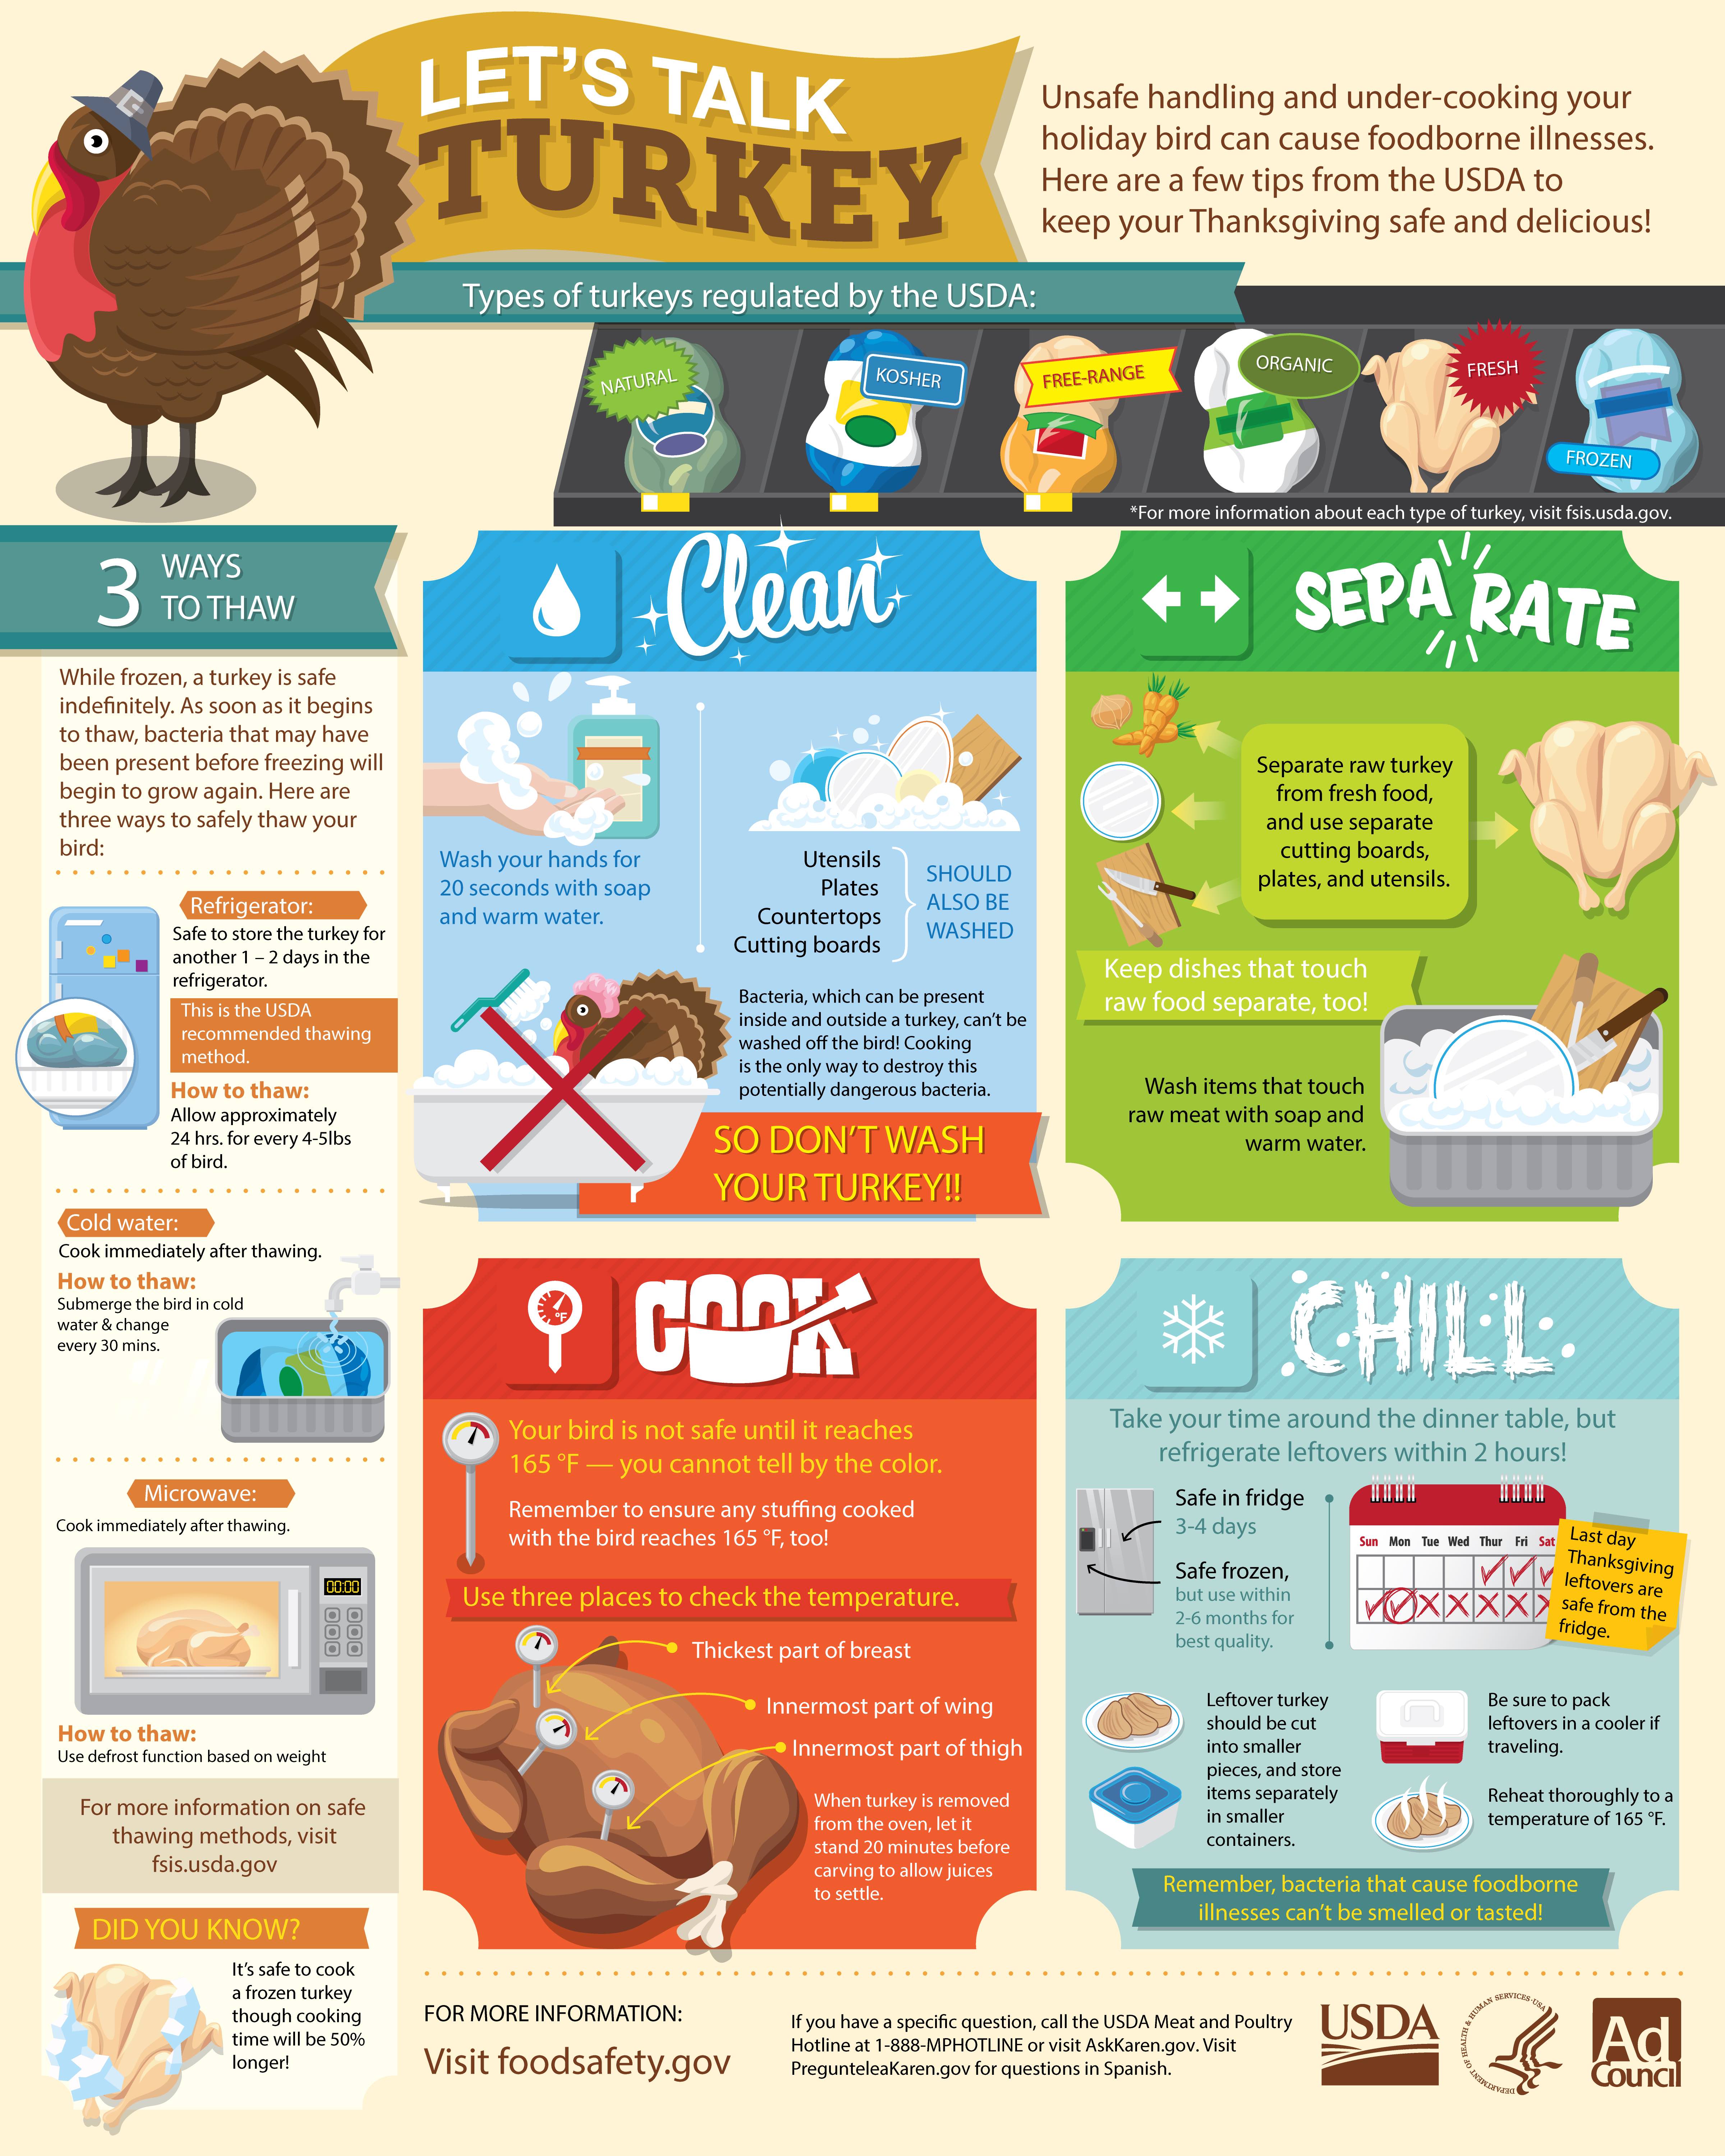 safe food handling practices for thanksgiving turkey